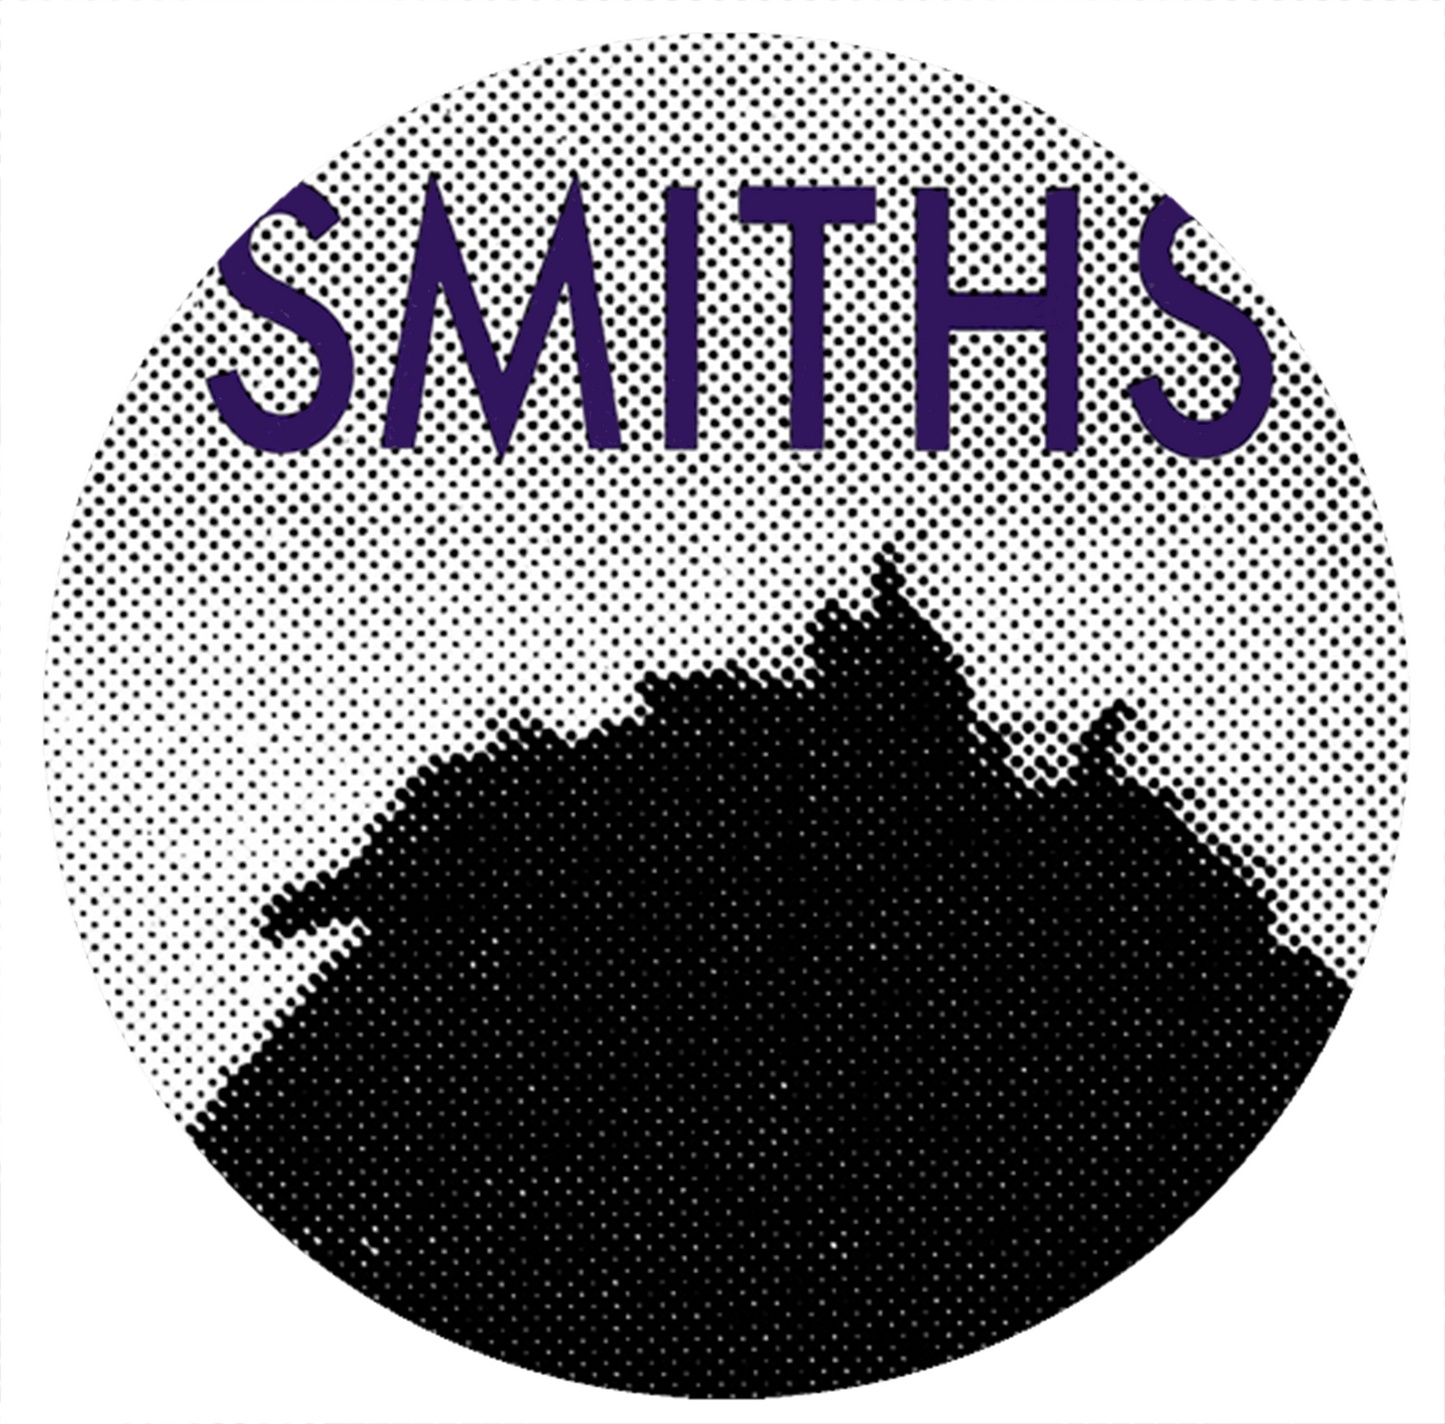 THE SMITHS - How Soon Is Now? - 1985 - Beach Towel